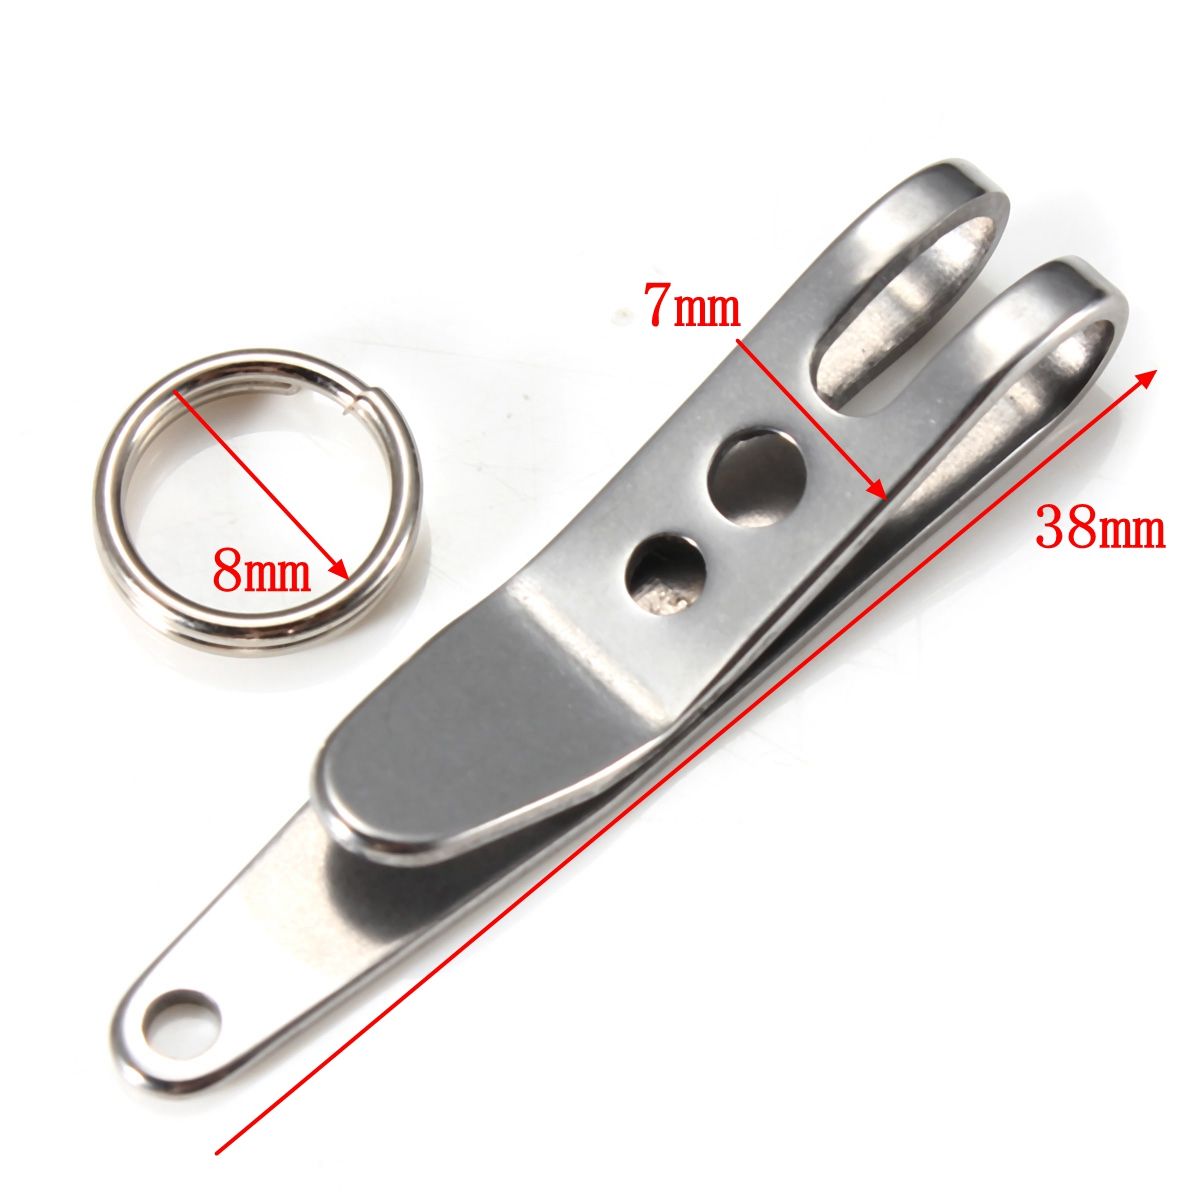 Xtools-EDC-Mini-Clip-Flashlight-Clip-Money-Cash-Holder-Key-Chain-Clip-With-Ring-988356